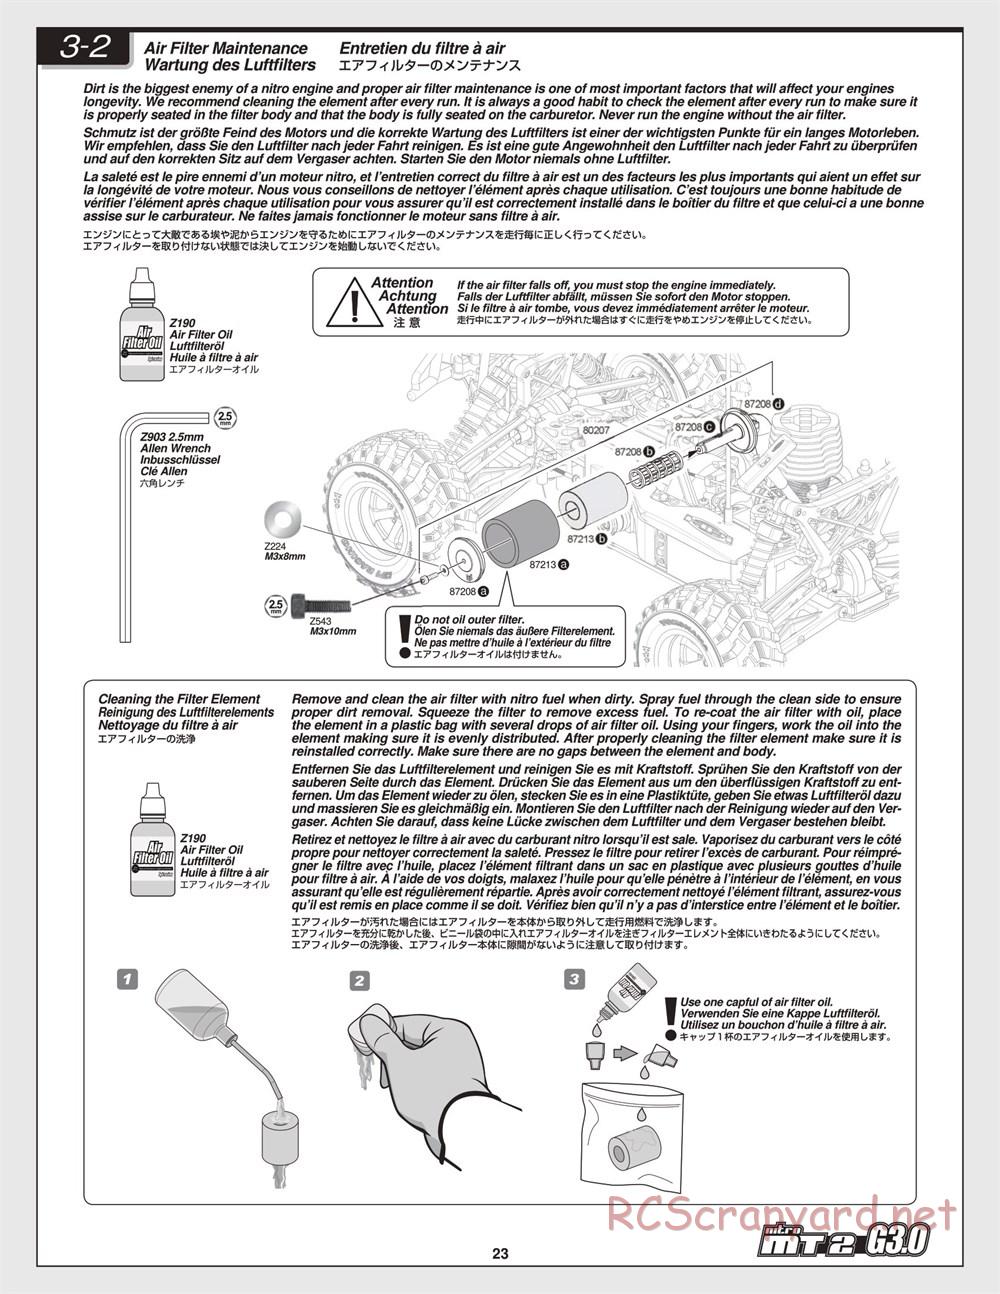 HPI - Nitro MT2 G3.0 - Manual - Page 23